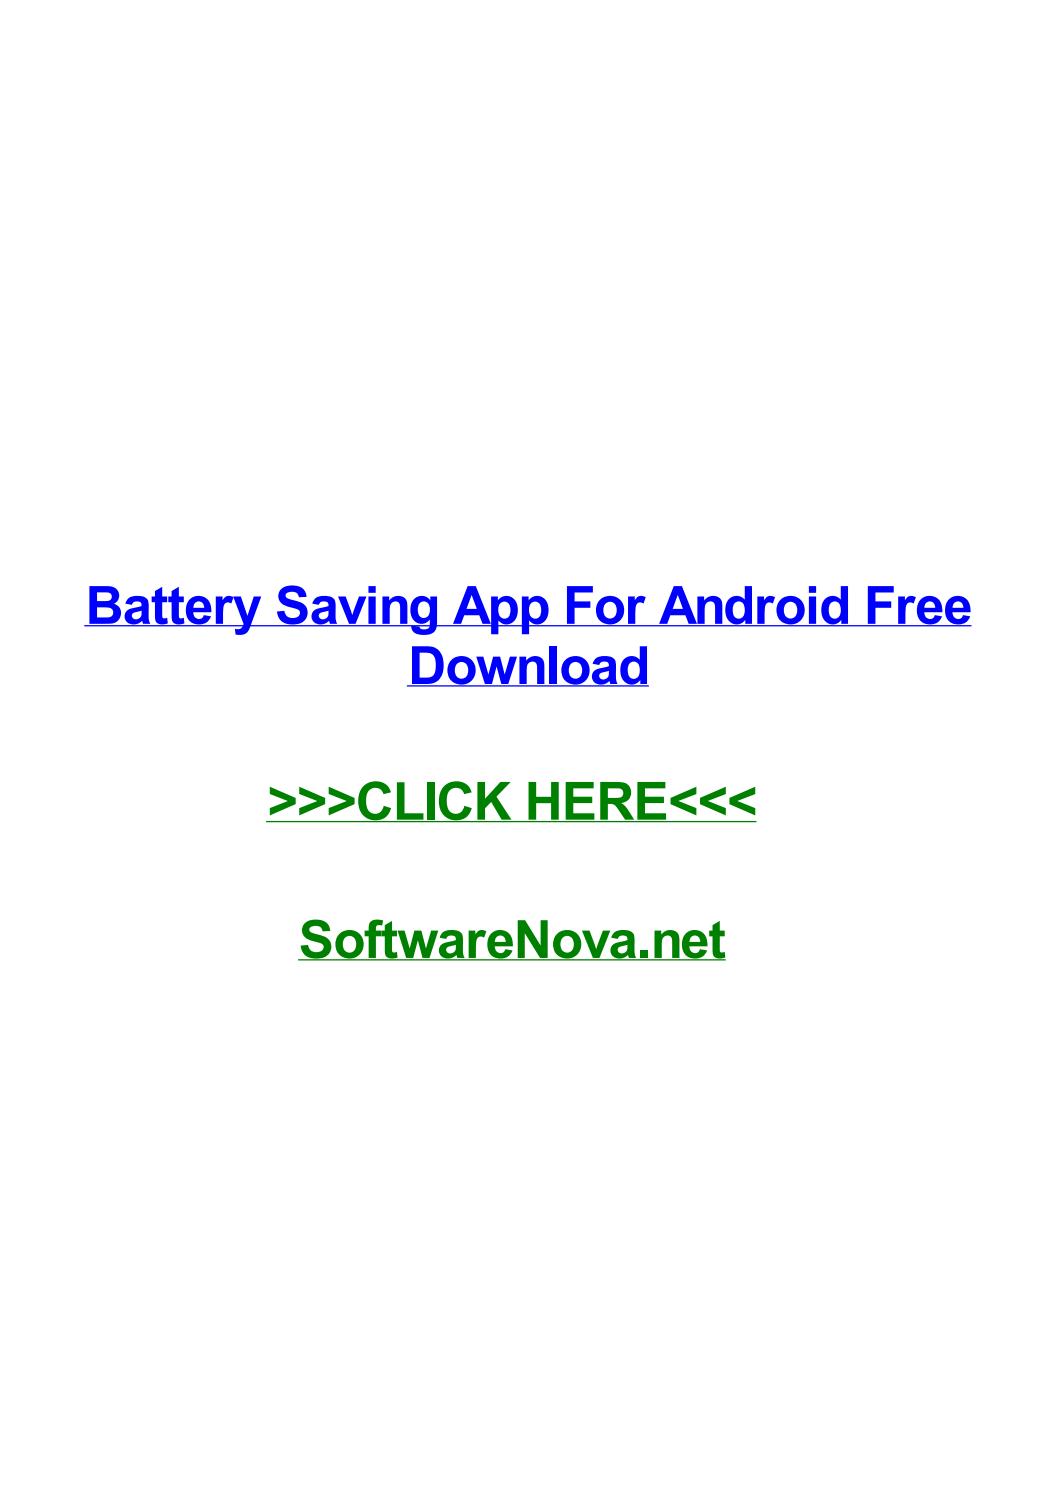 du battery saver app shuts off alarm